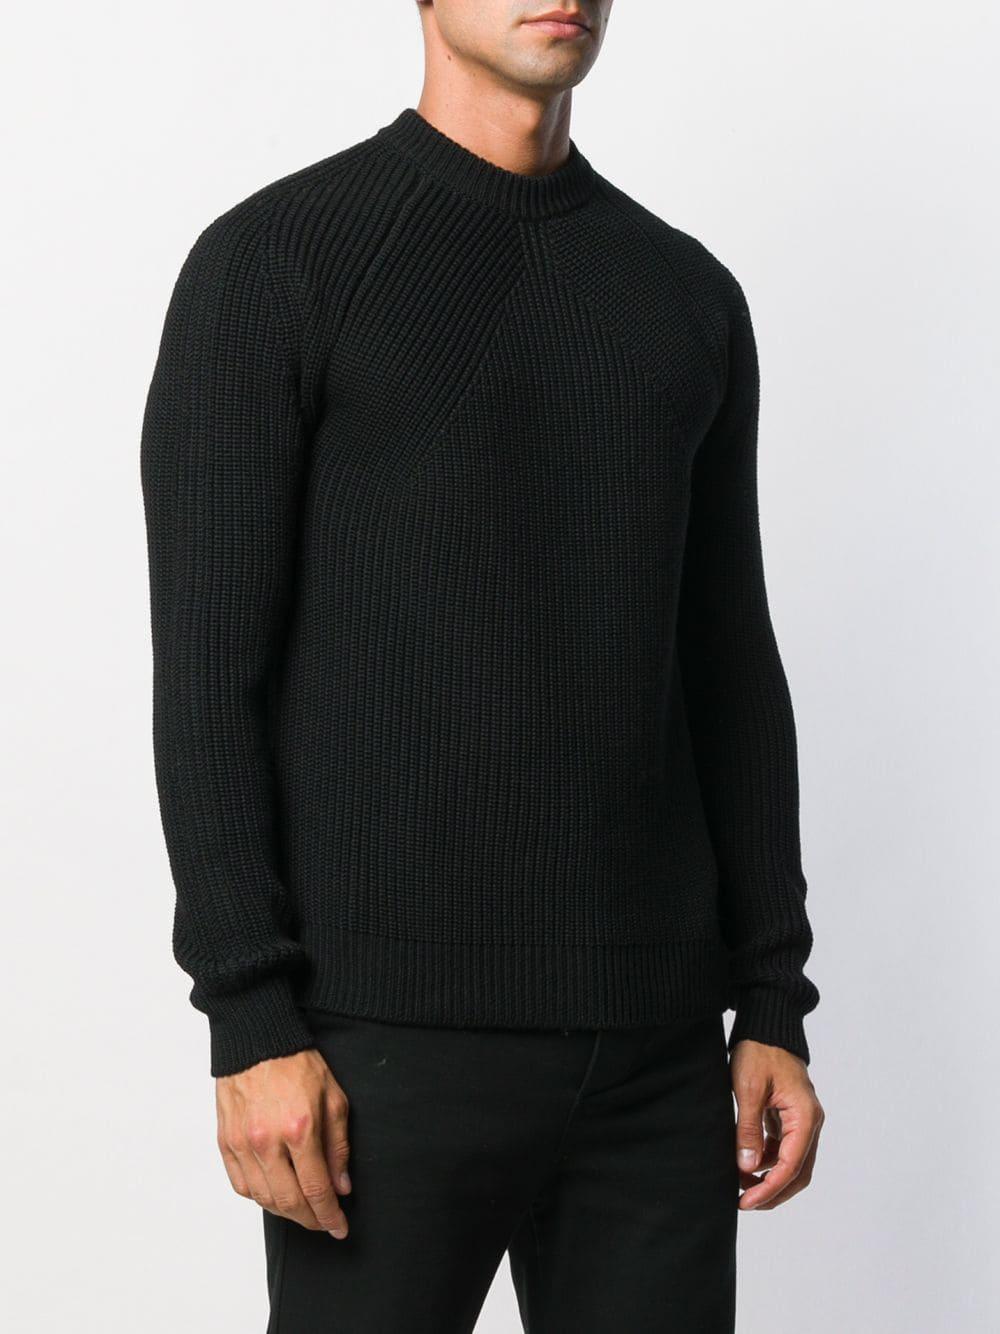 Roberto Collina Crew Neck Sweater in Black for Men - Lyst